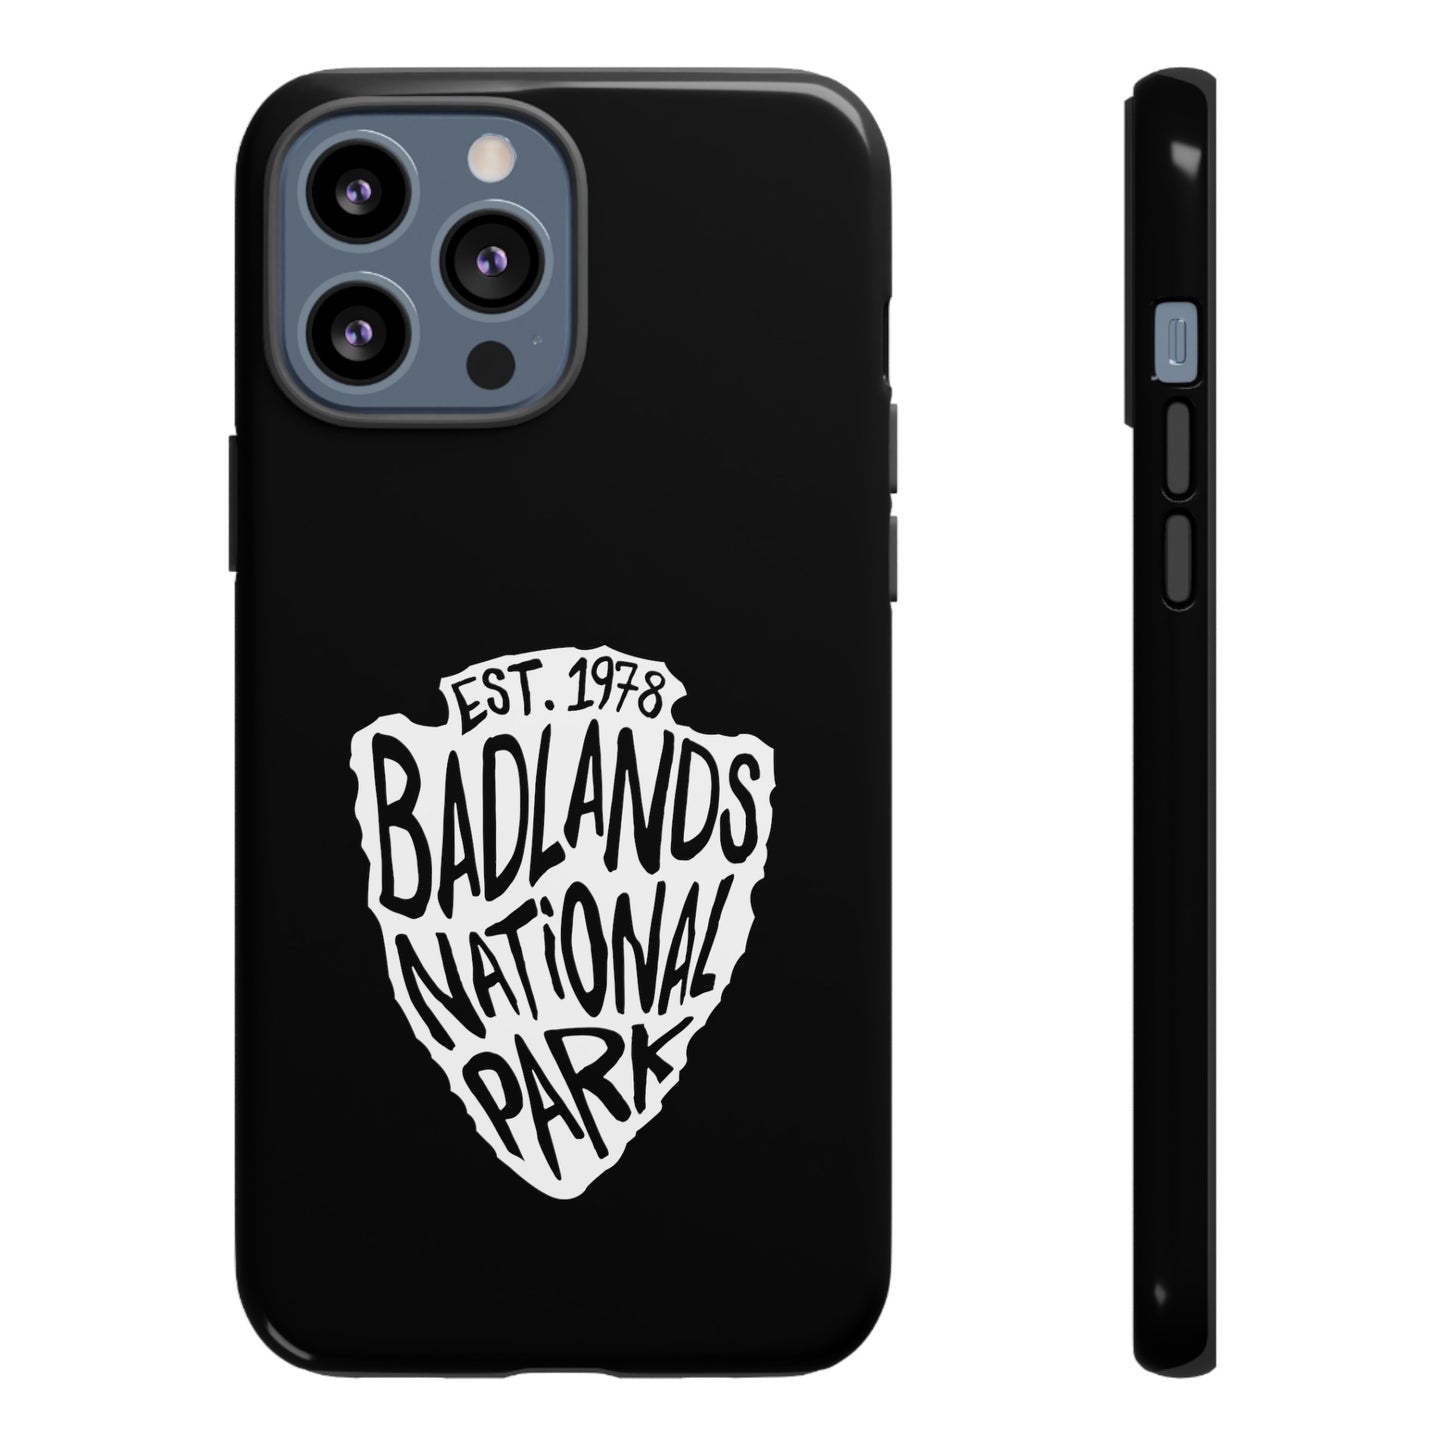 Badlands National Park Phone Case - Arrowhead Design